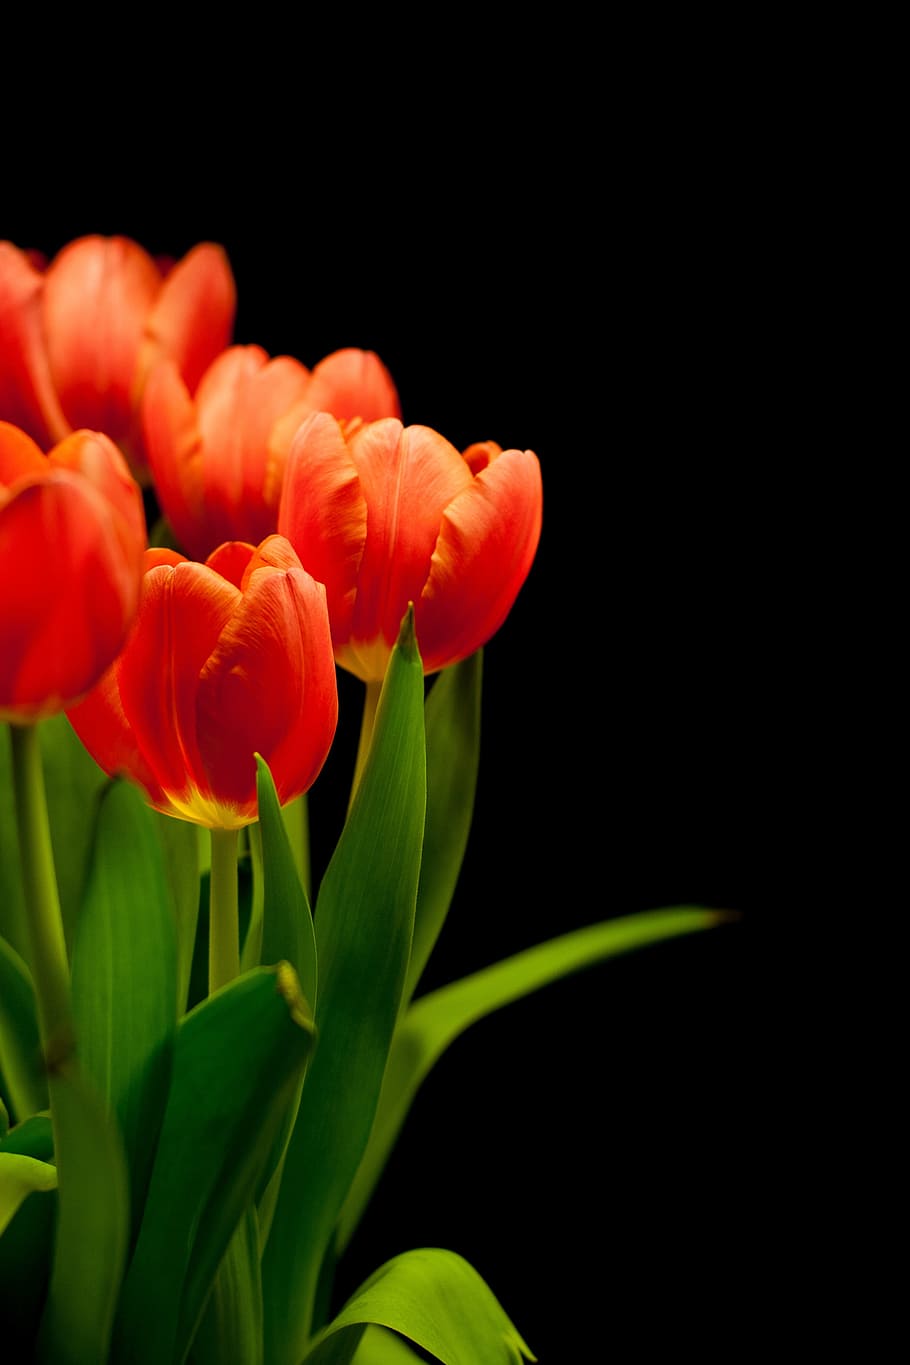 foto, oranye, bunga tulip, tulip, karangan bunga tulip, bunga, karangan bunga, kemerahan, merah, bunga musim semi